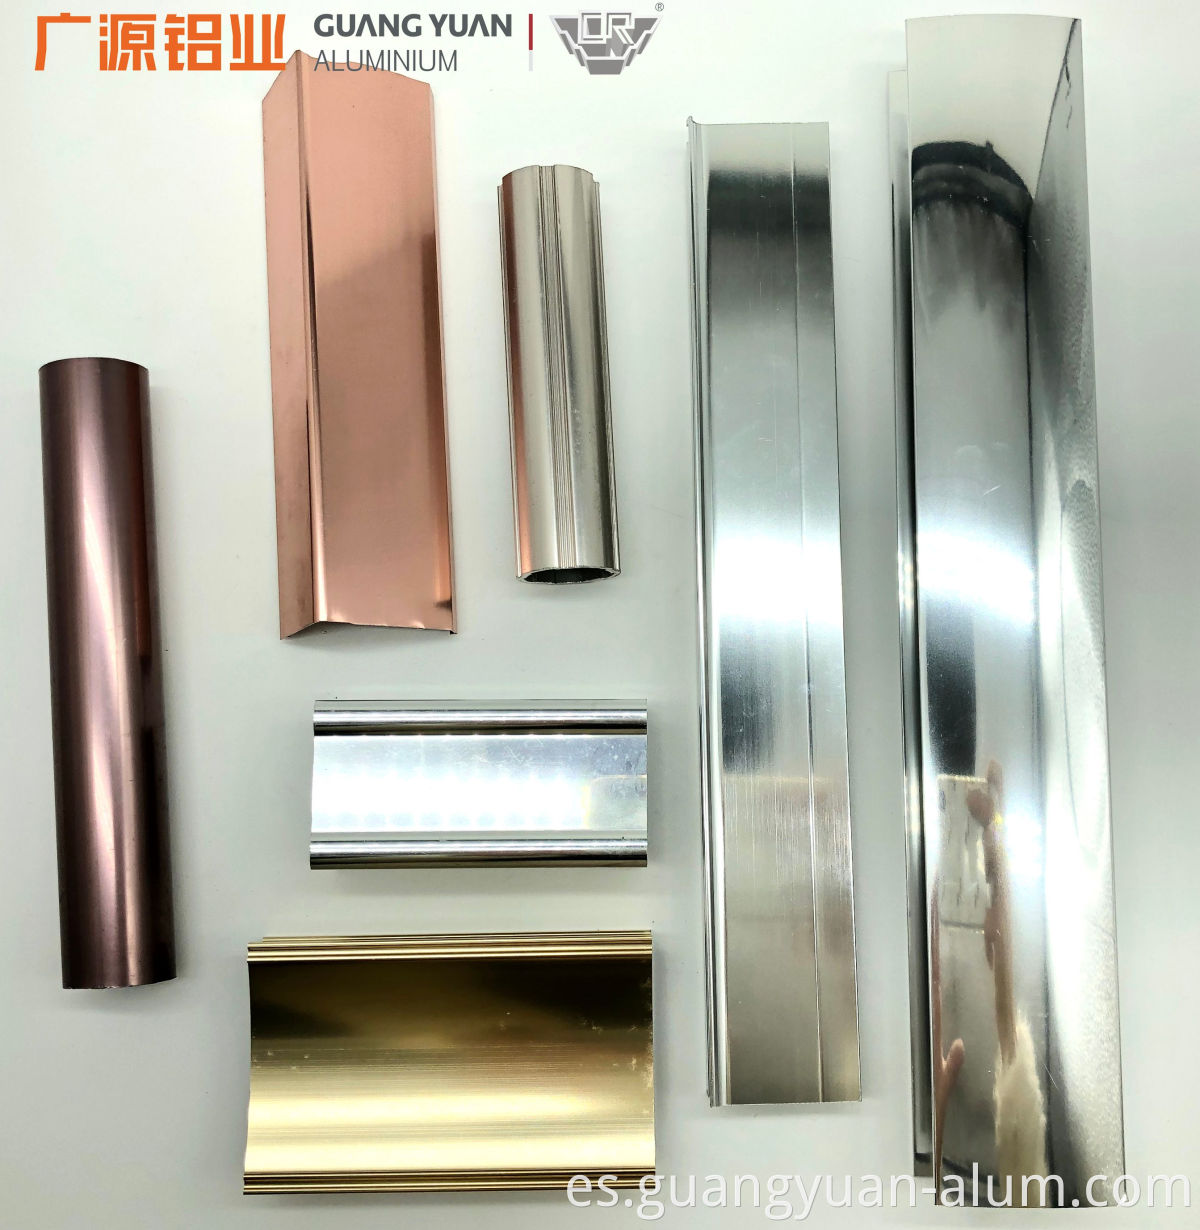 guangyuan aluminum co., ltd polished aluminium profile U shape aluminum profile shower aluminium profile